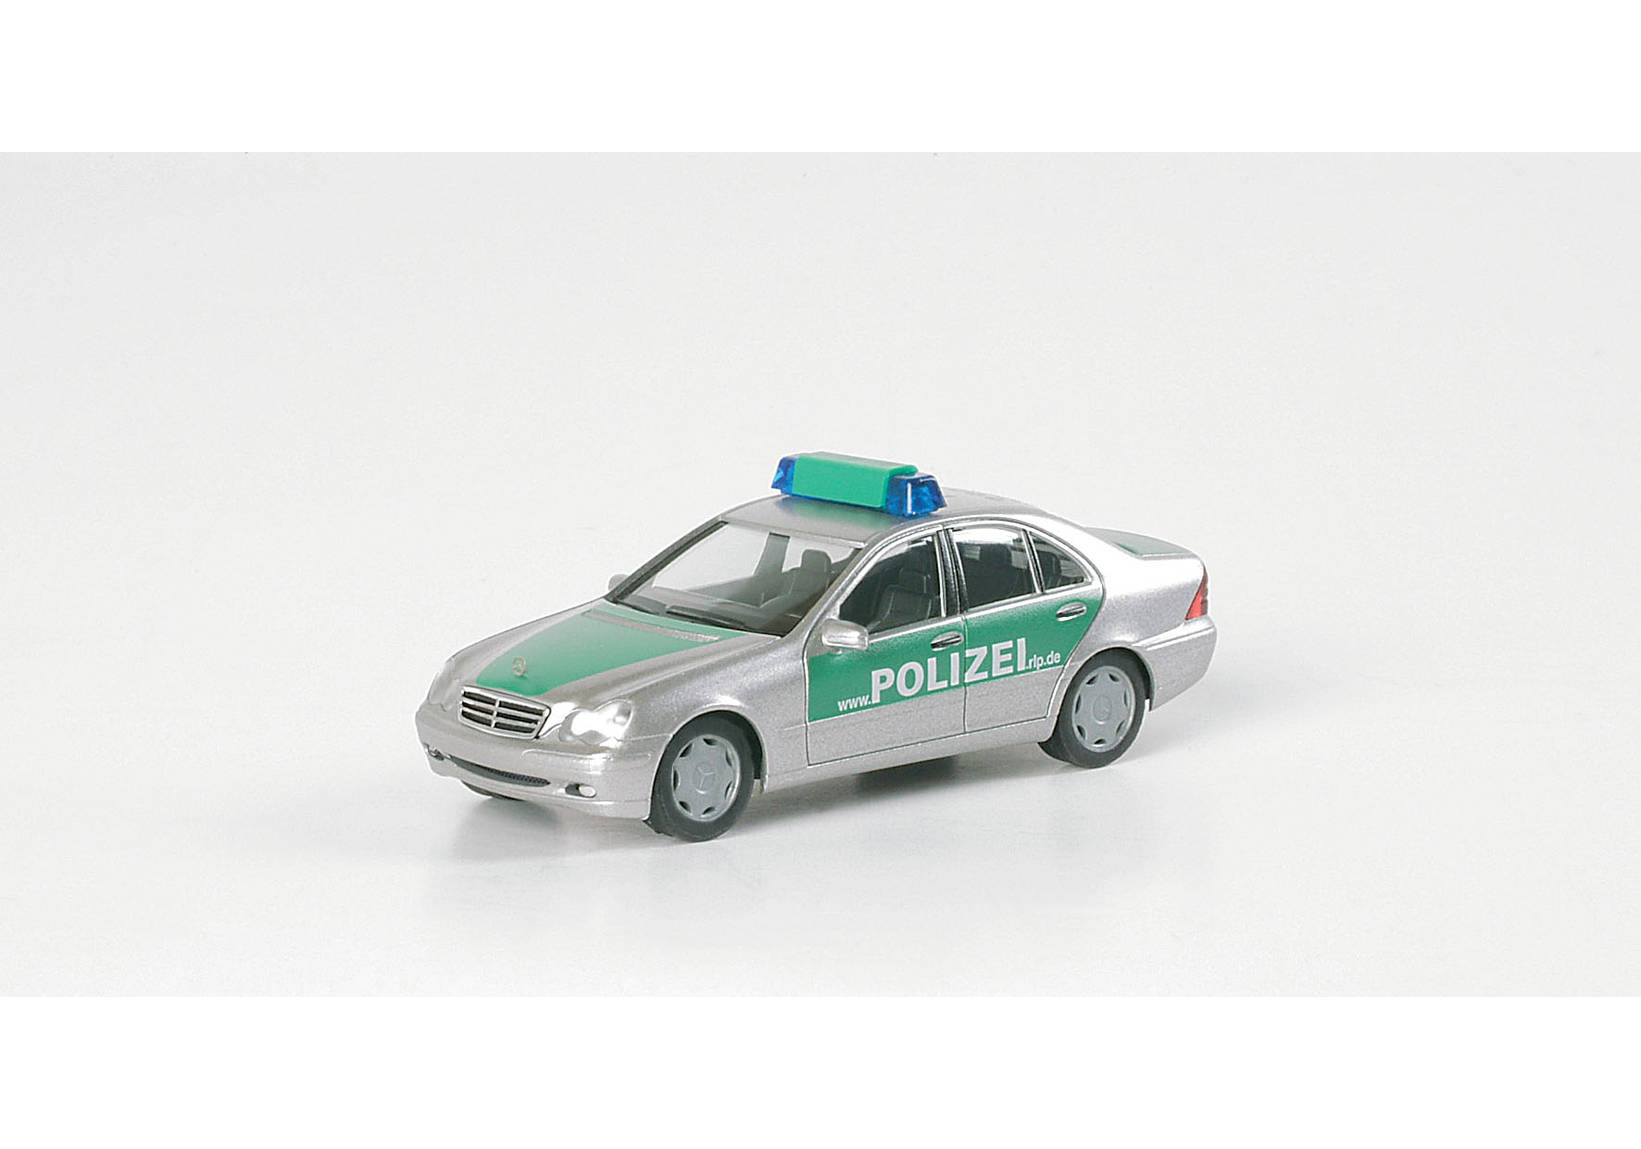 Mercedes-Benz C-class "police"